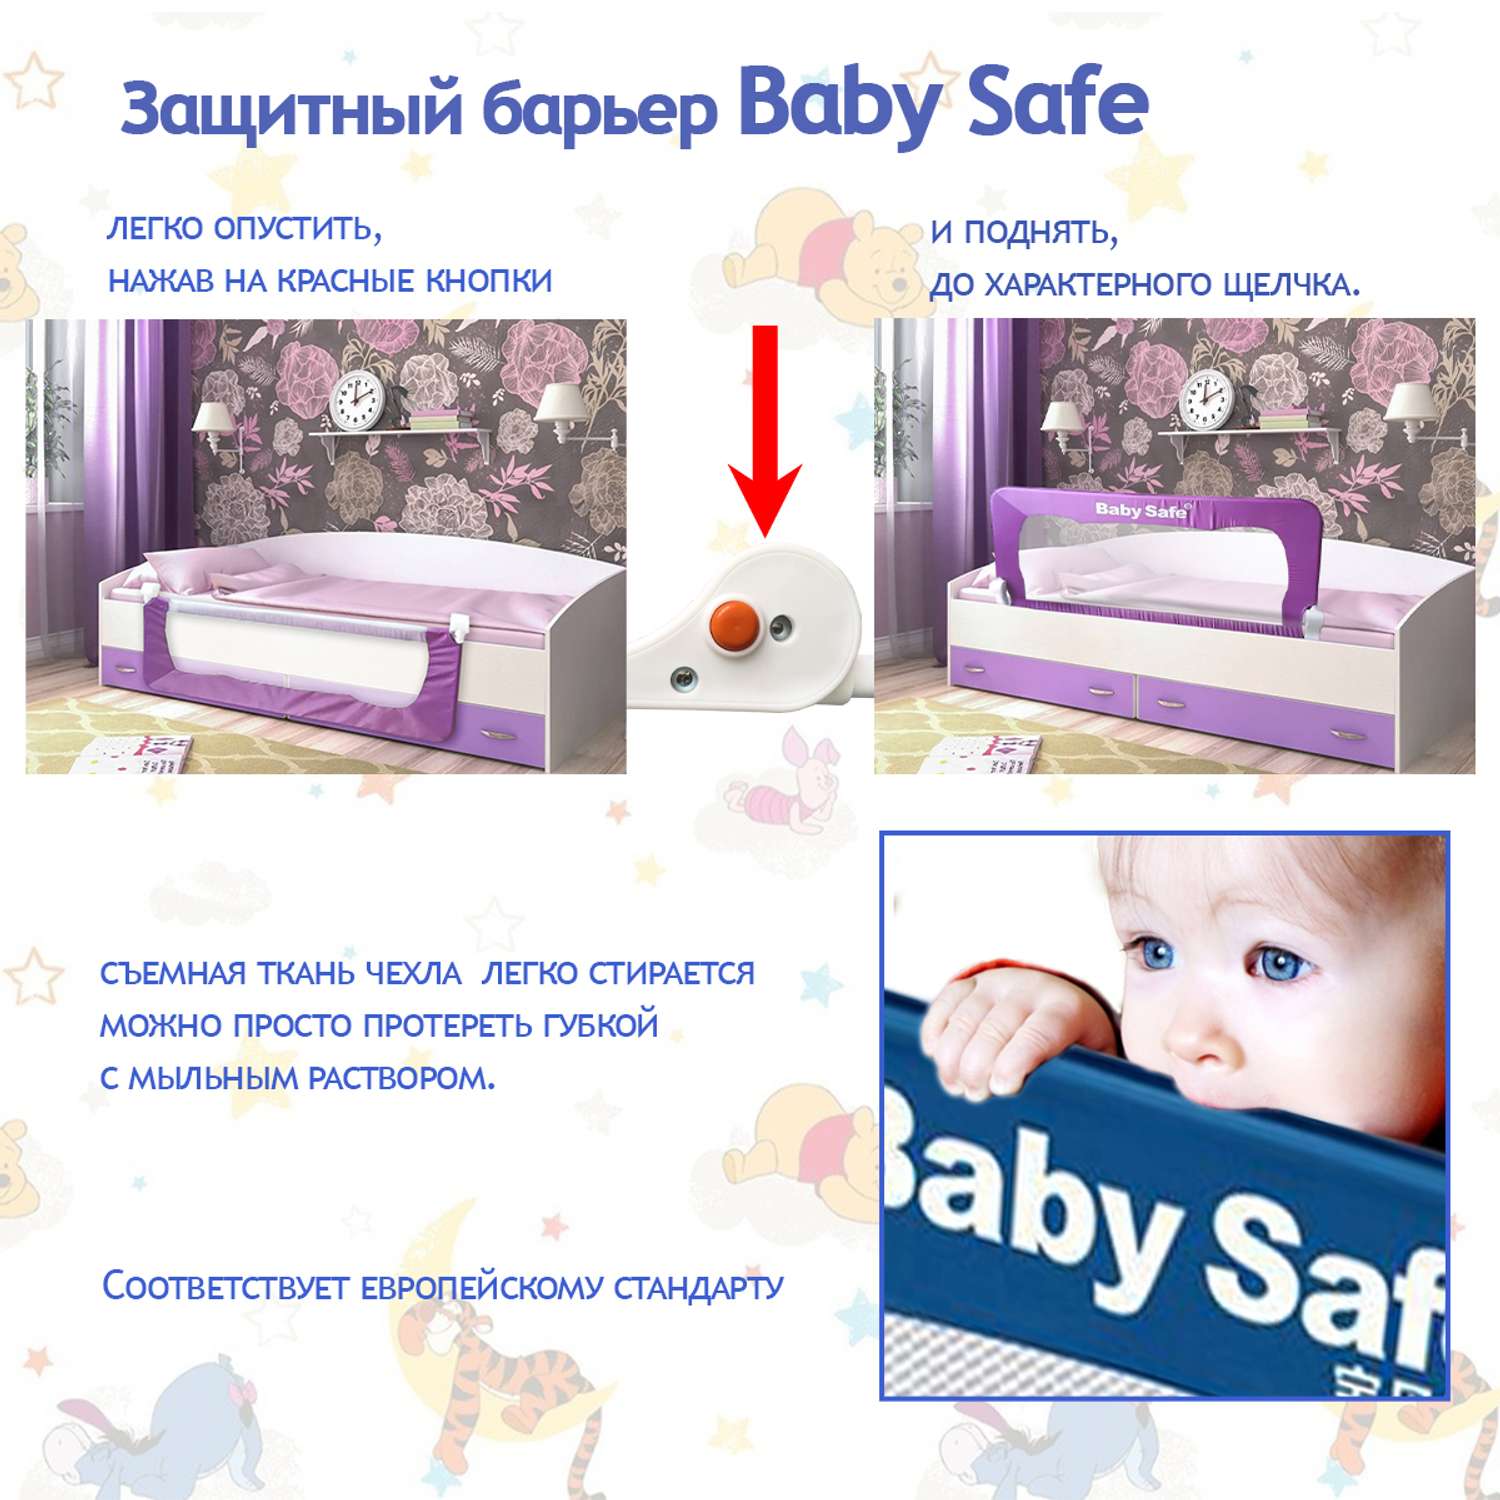 Барьер защитный для кровати Baby Safe защитный для кровати Ушки 180х66 серый - фото 5